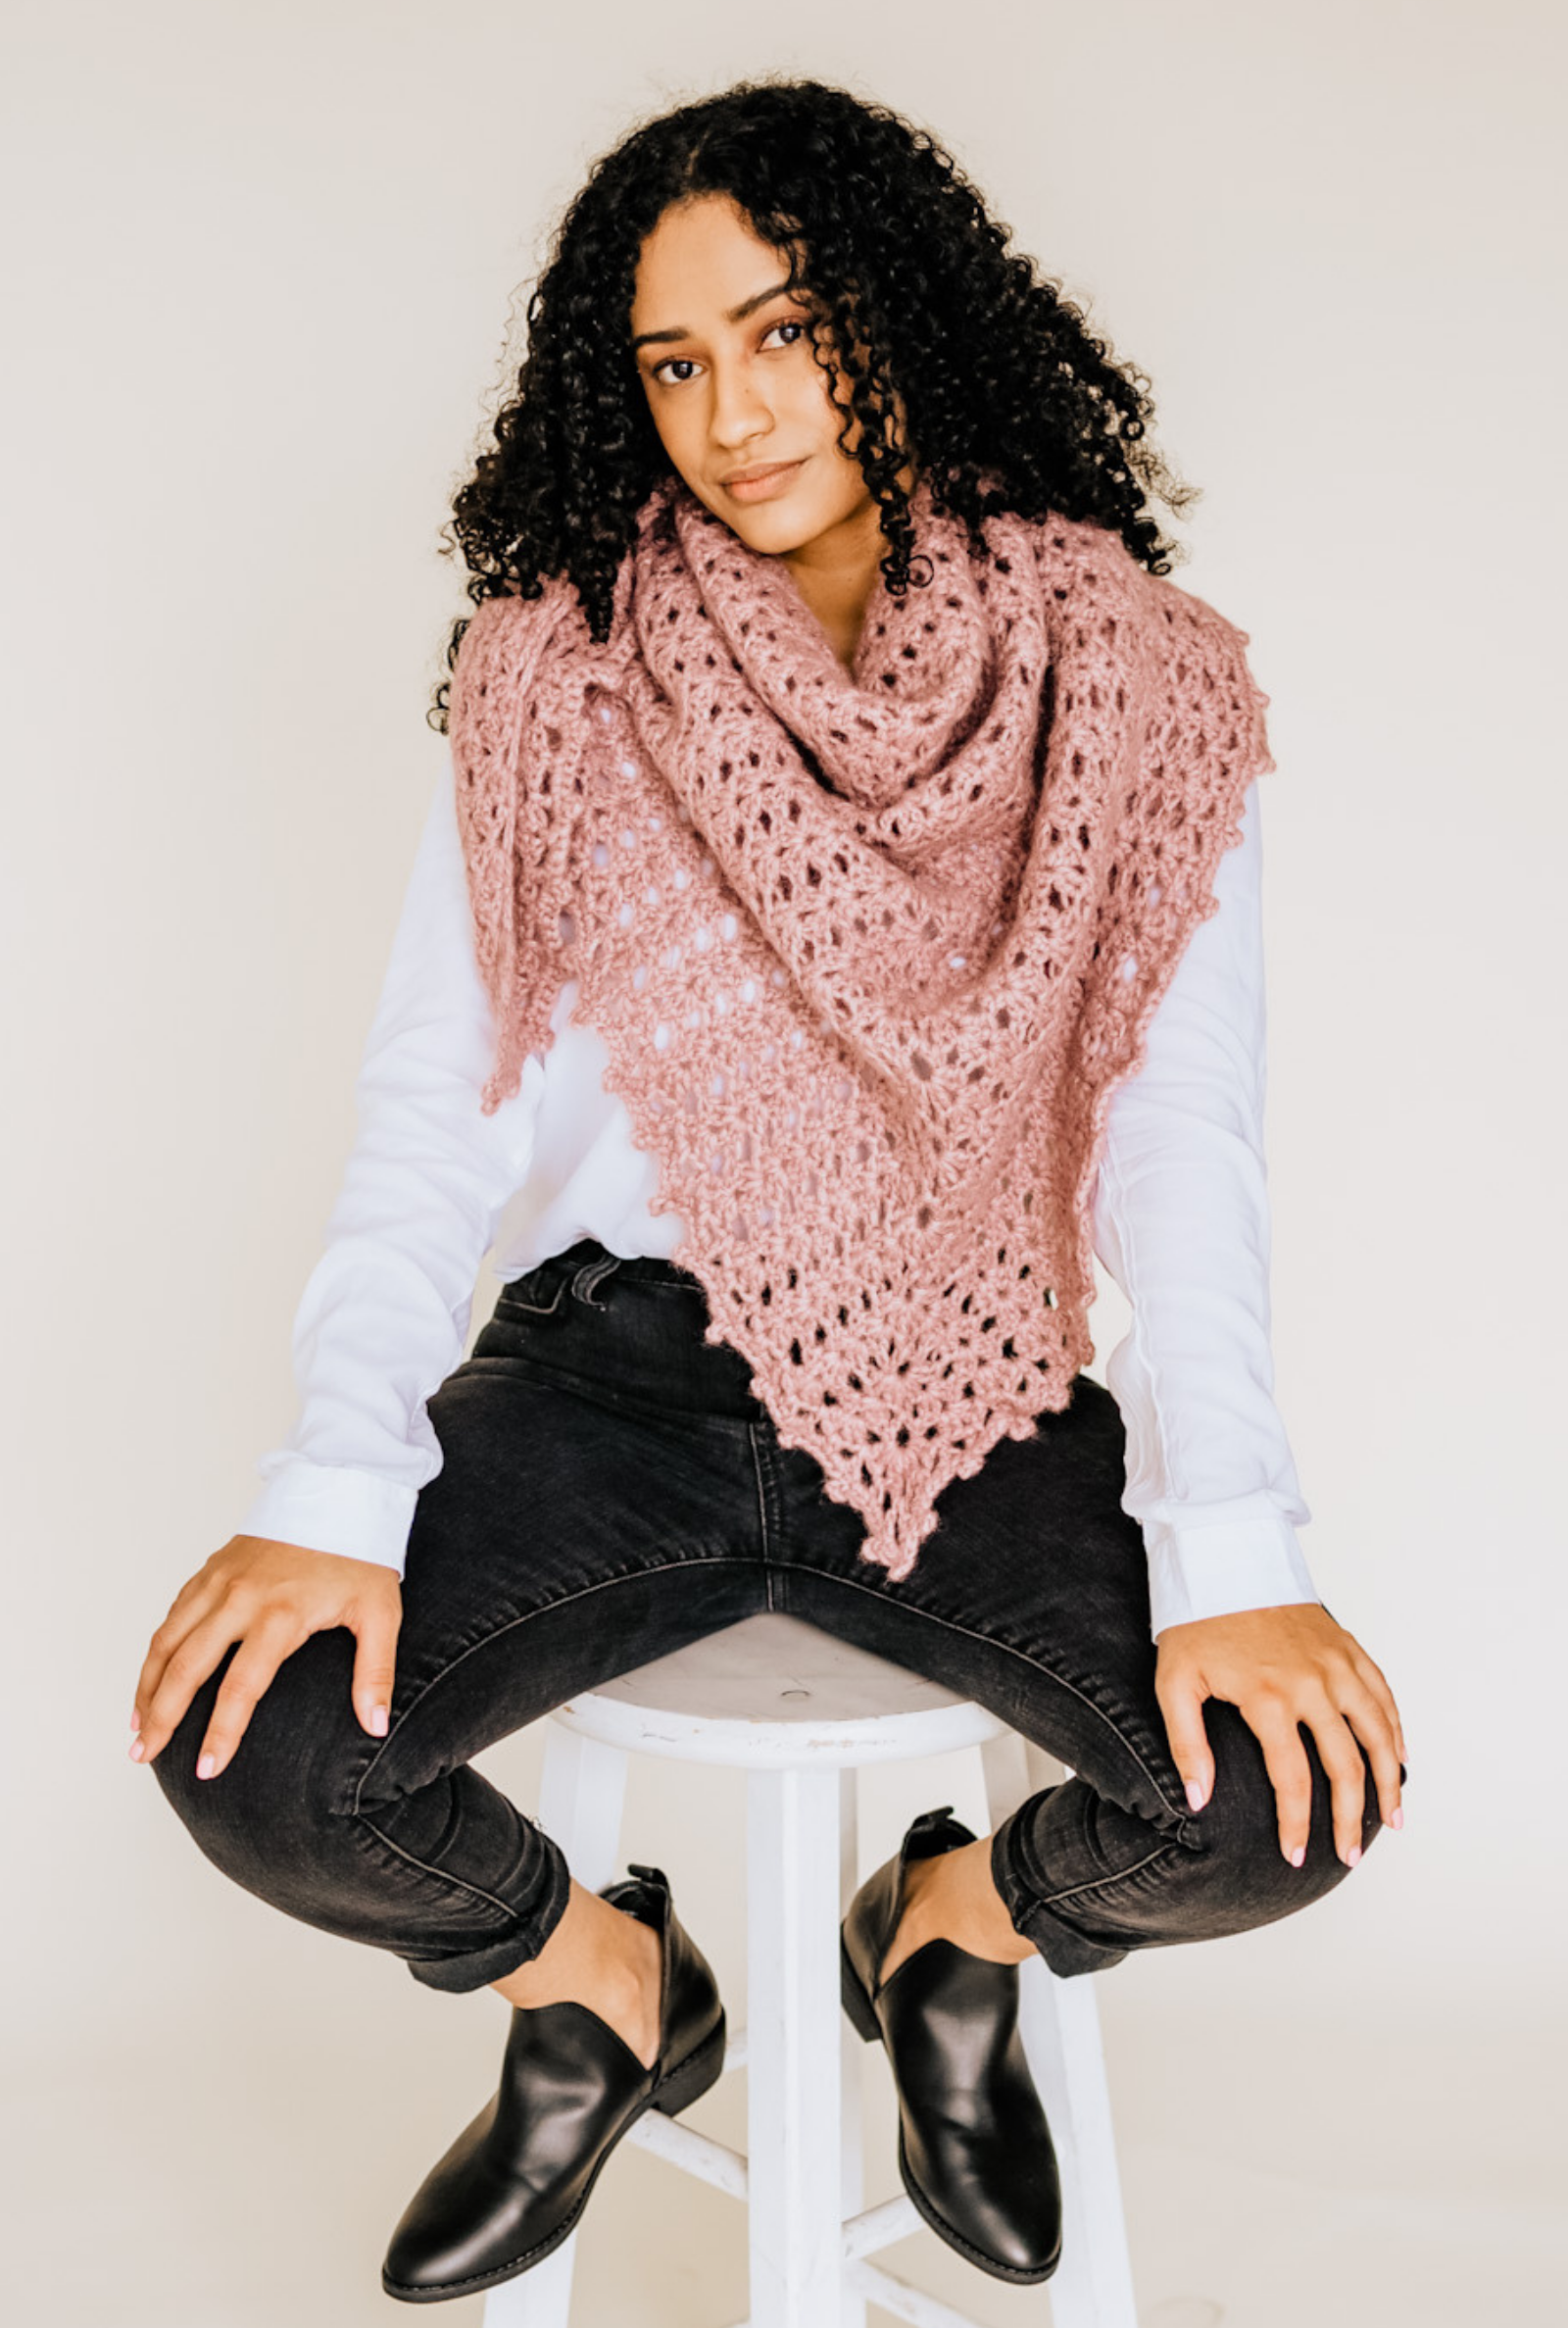 Elysian Wrap // Crochet PDF Pattern